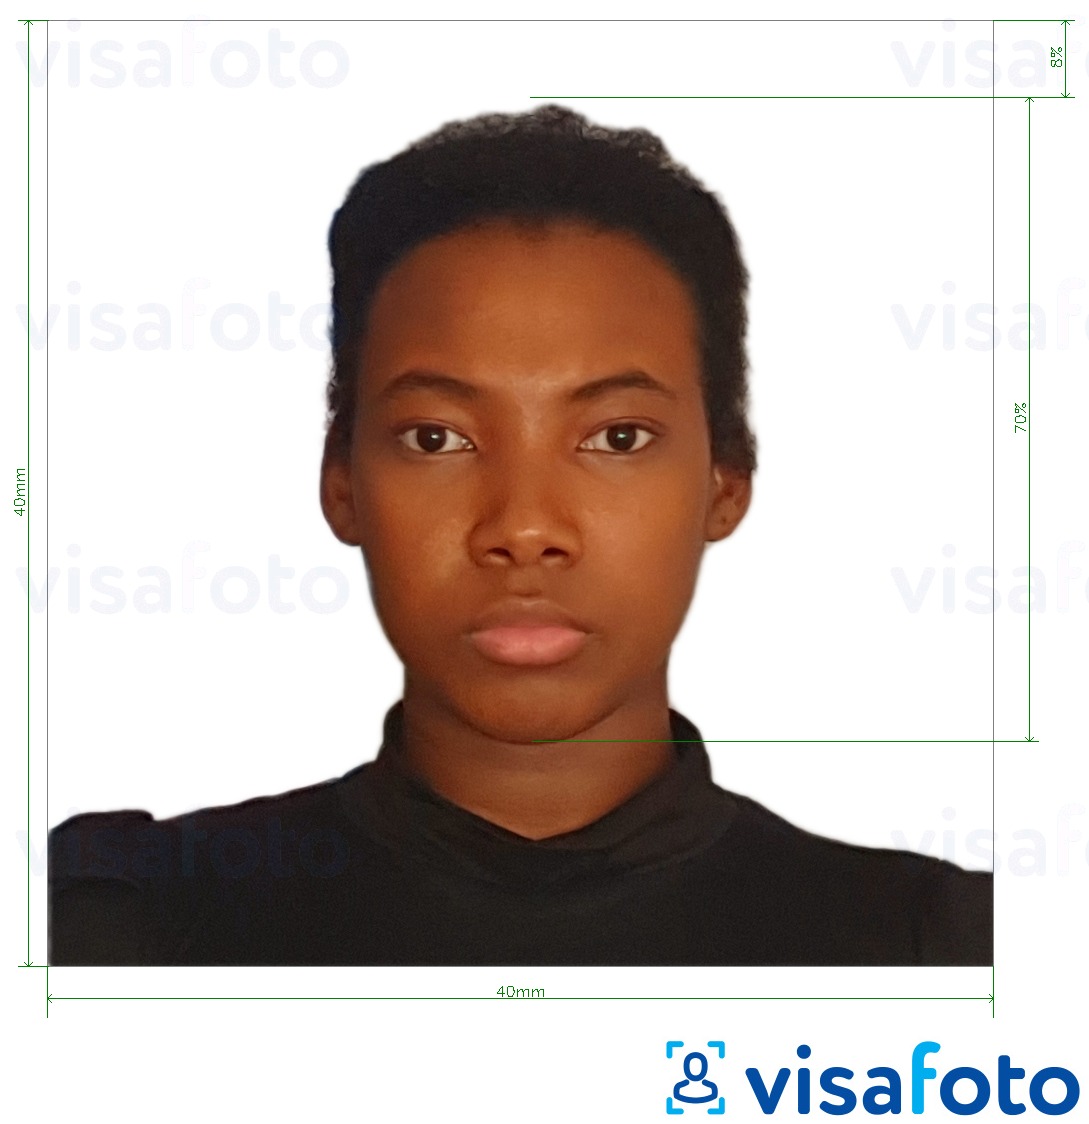 Contoh foto untuk Pasport Madagaskar 40x40 mm dengan spesifikasi saiz yang tepat.